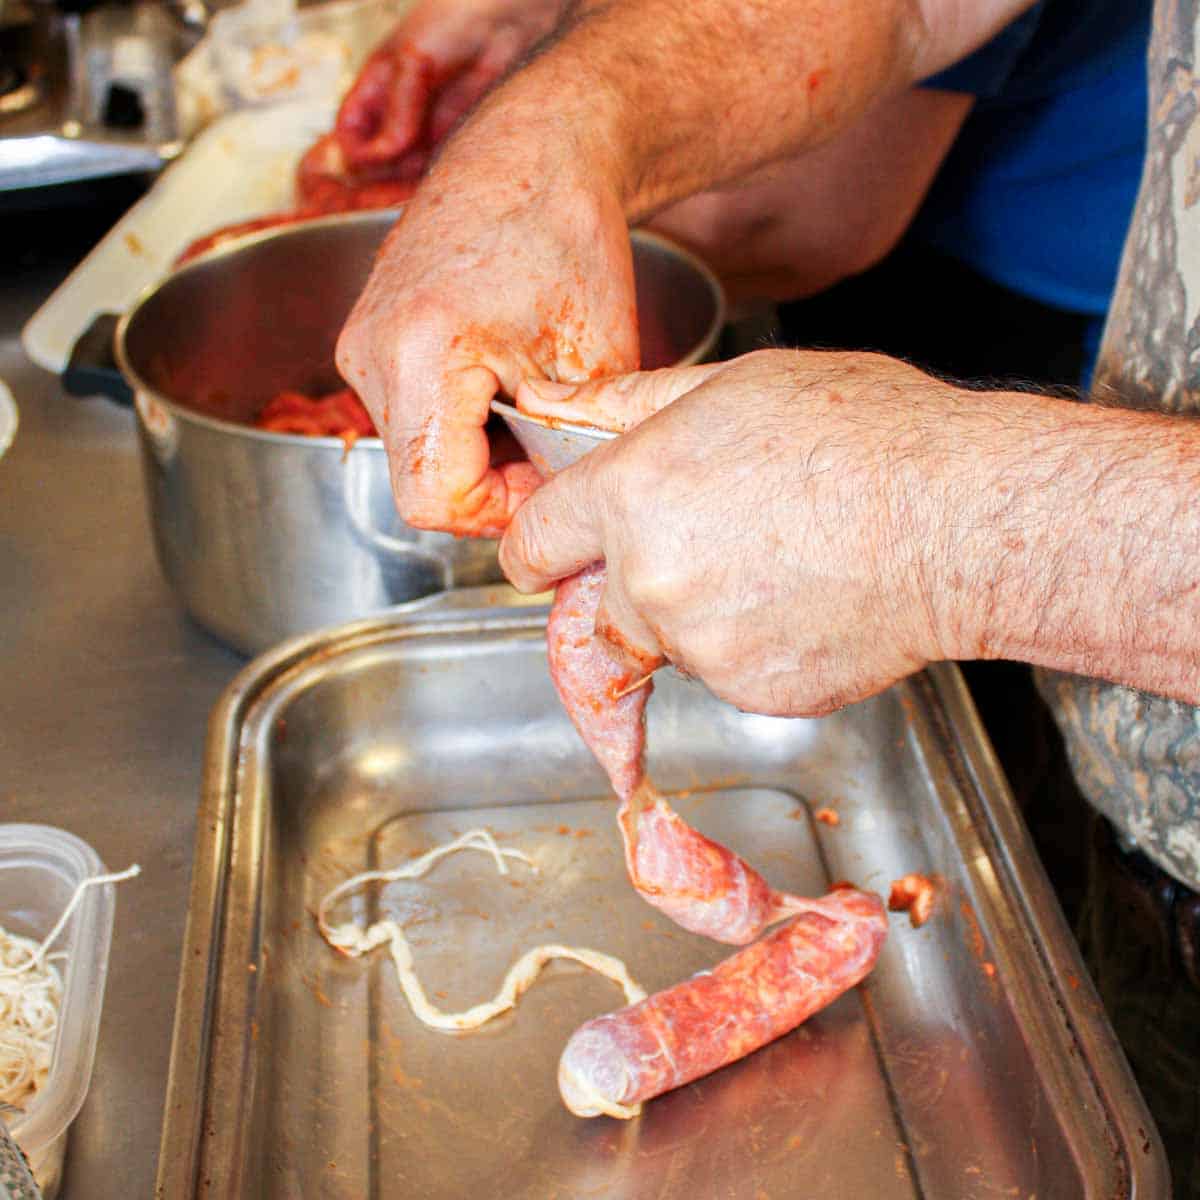 A man is preparing Portuguese sausage in a pan.